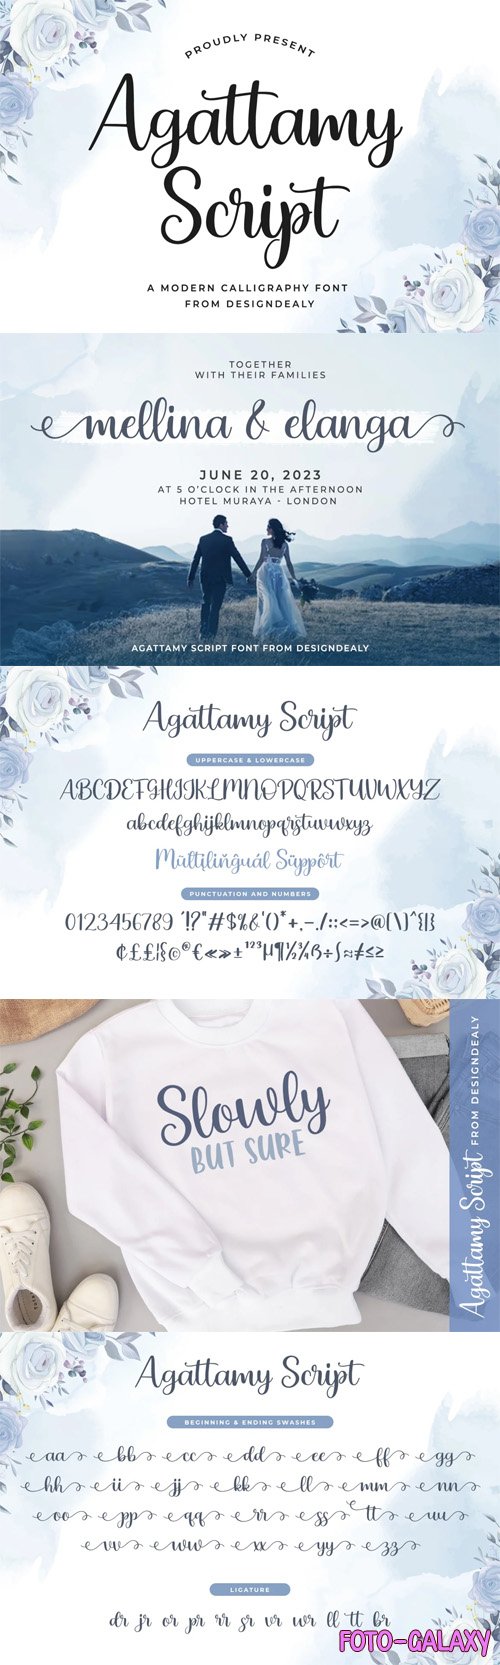 Agattamy Script - Modern Calligraphy Font